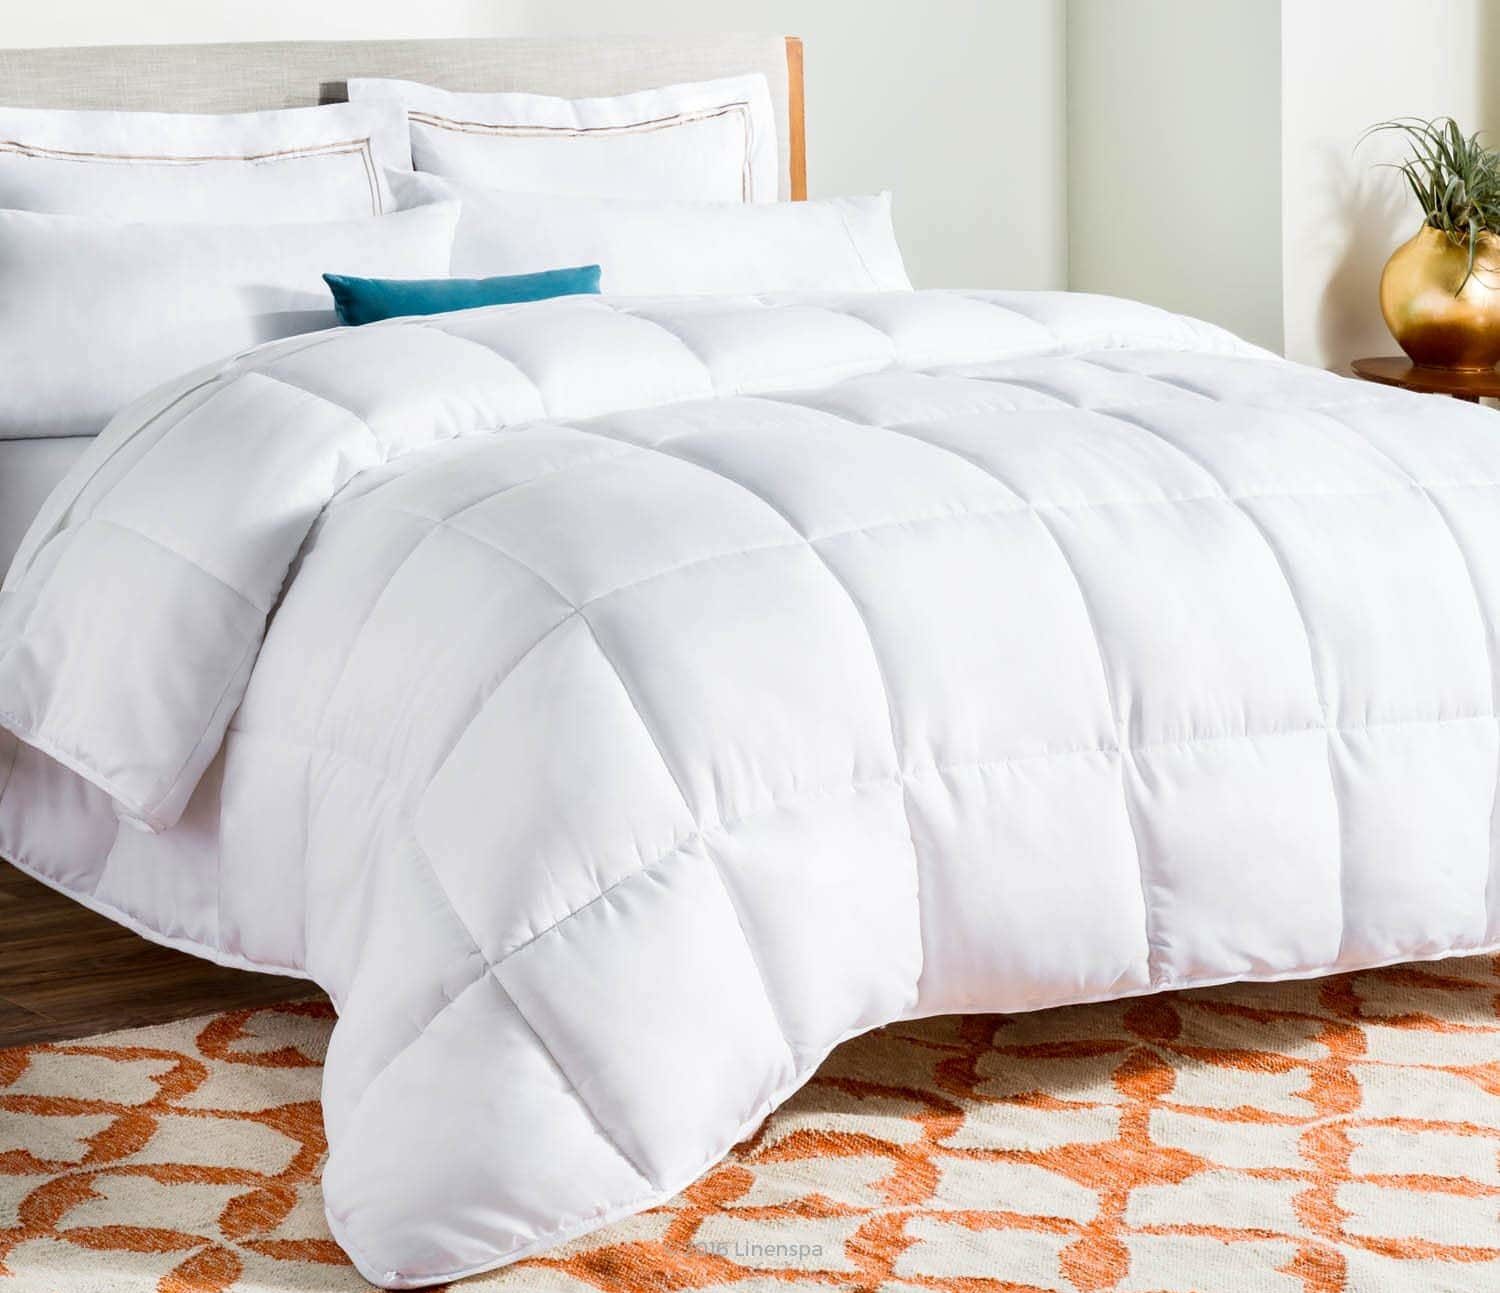 Linenspa All-Season down alternative comforter